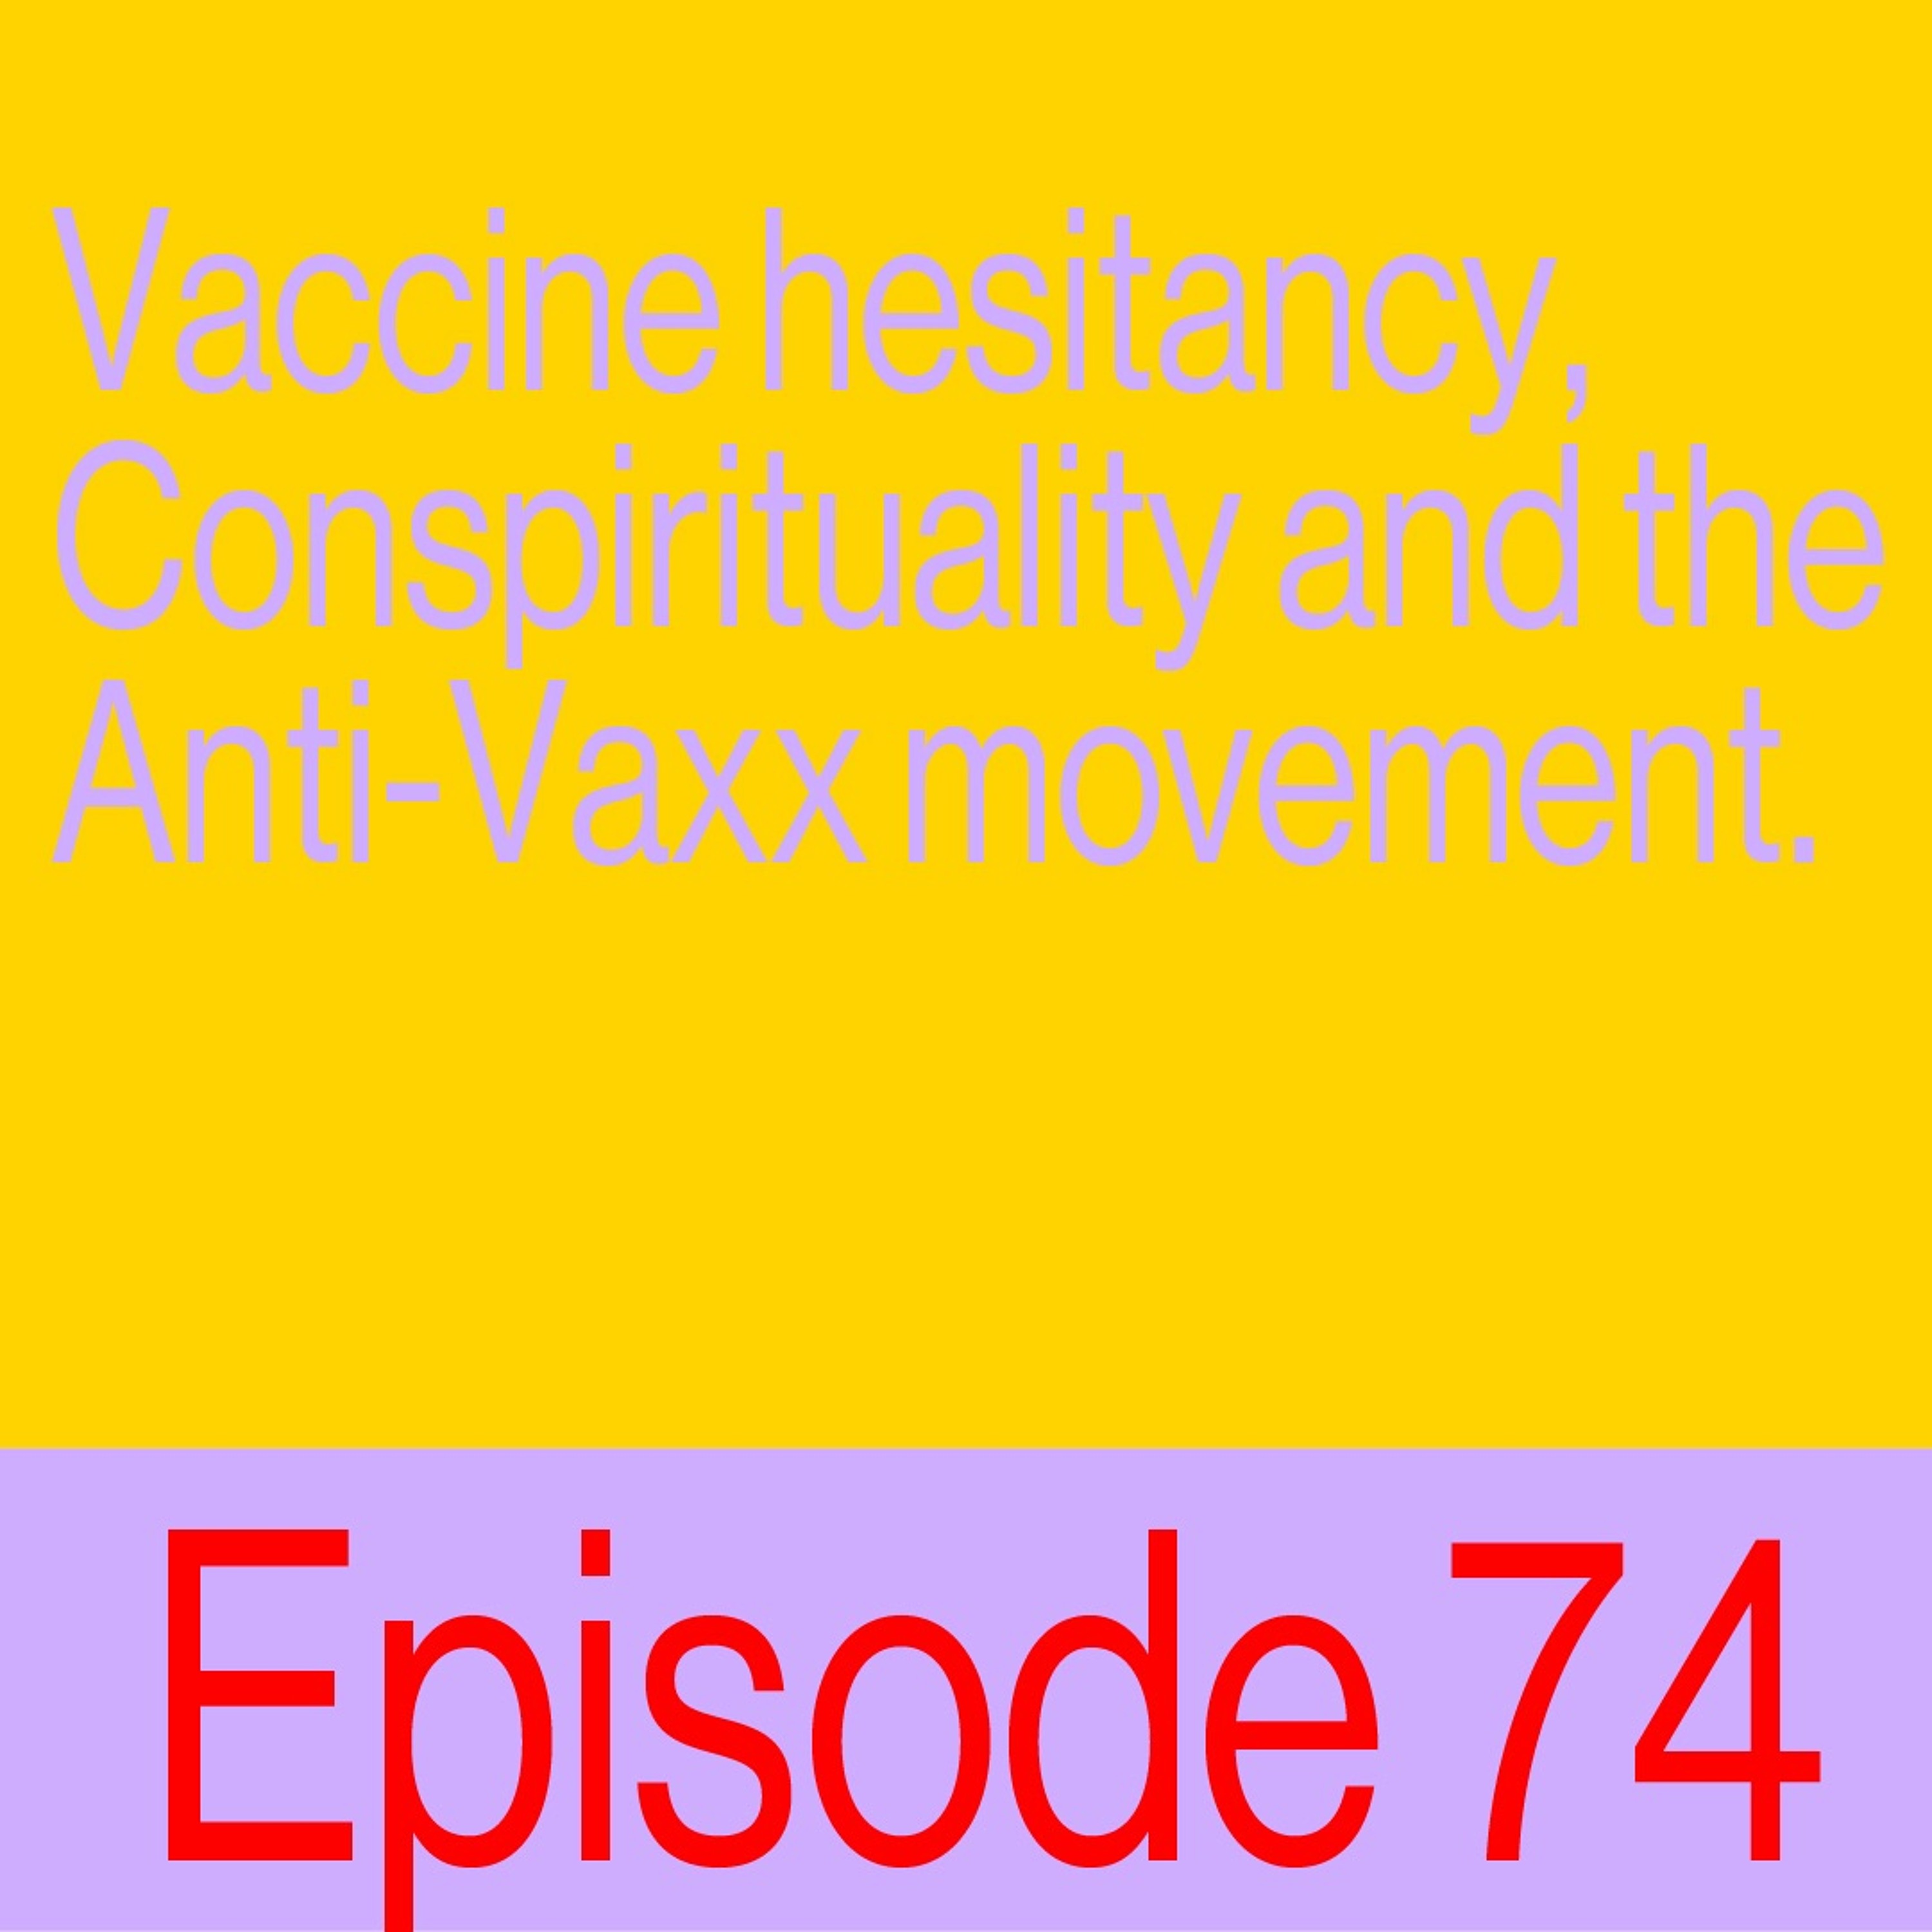 Episode 74: Vaccine hesitancy, conspirituality, and the anti-vaxx movement